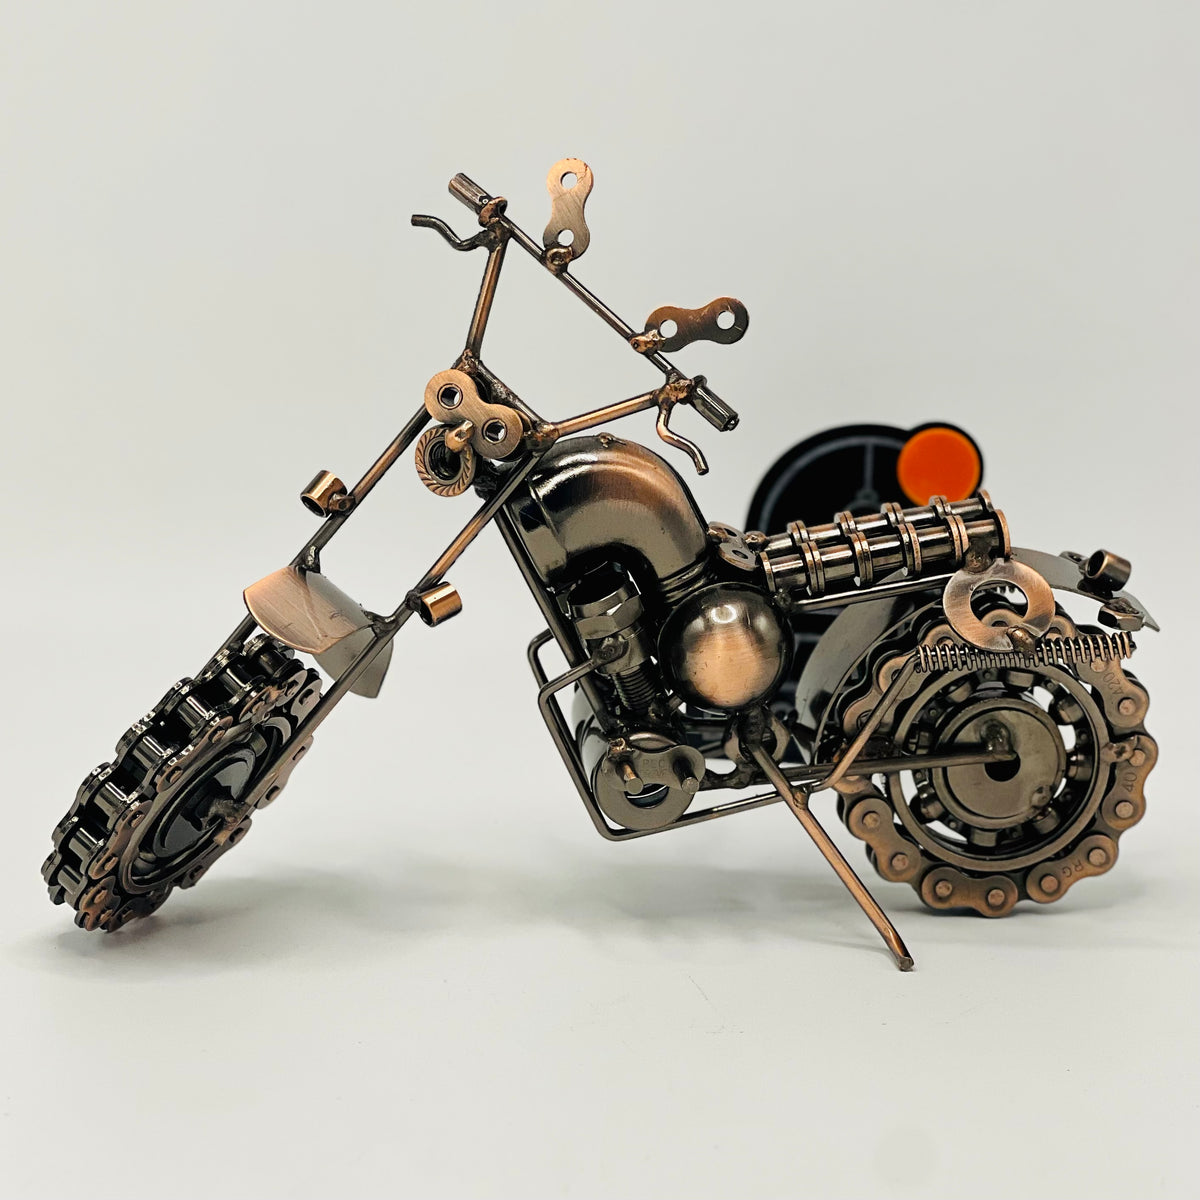 Retro Metal  Bike Craft